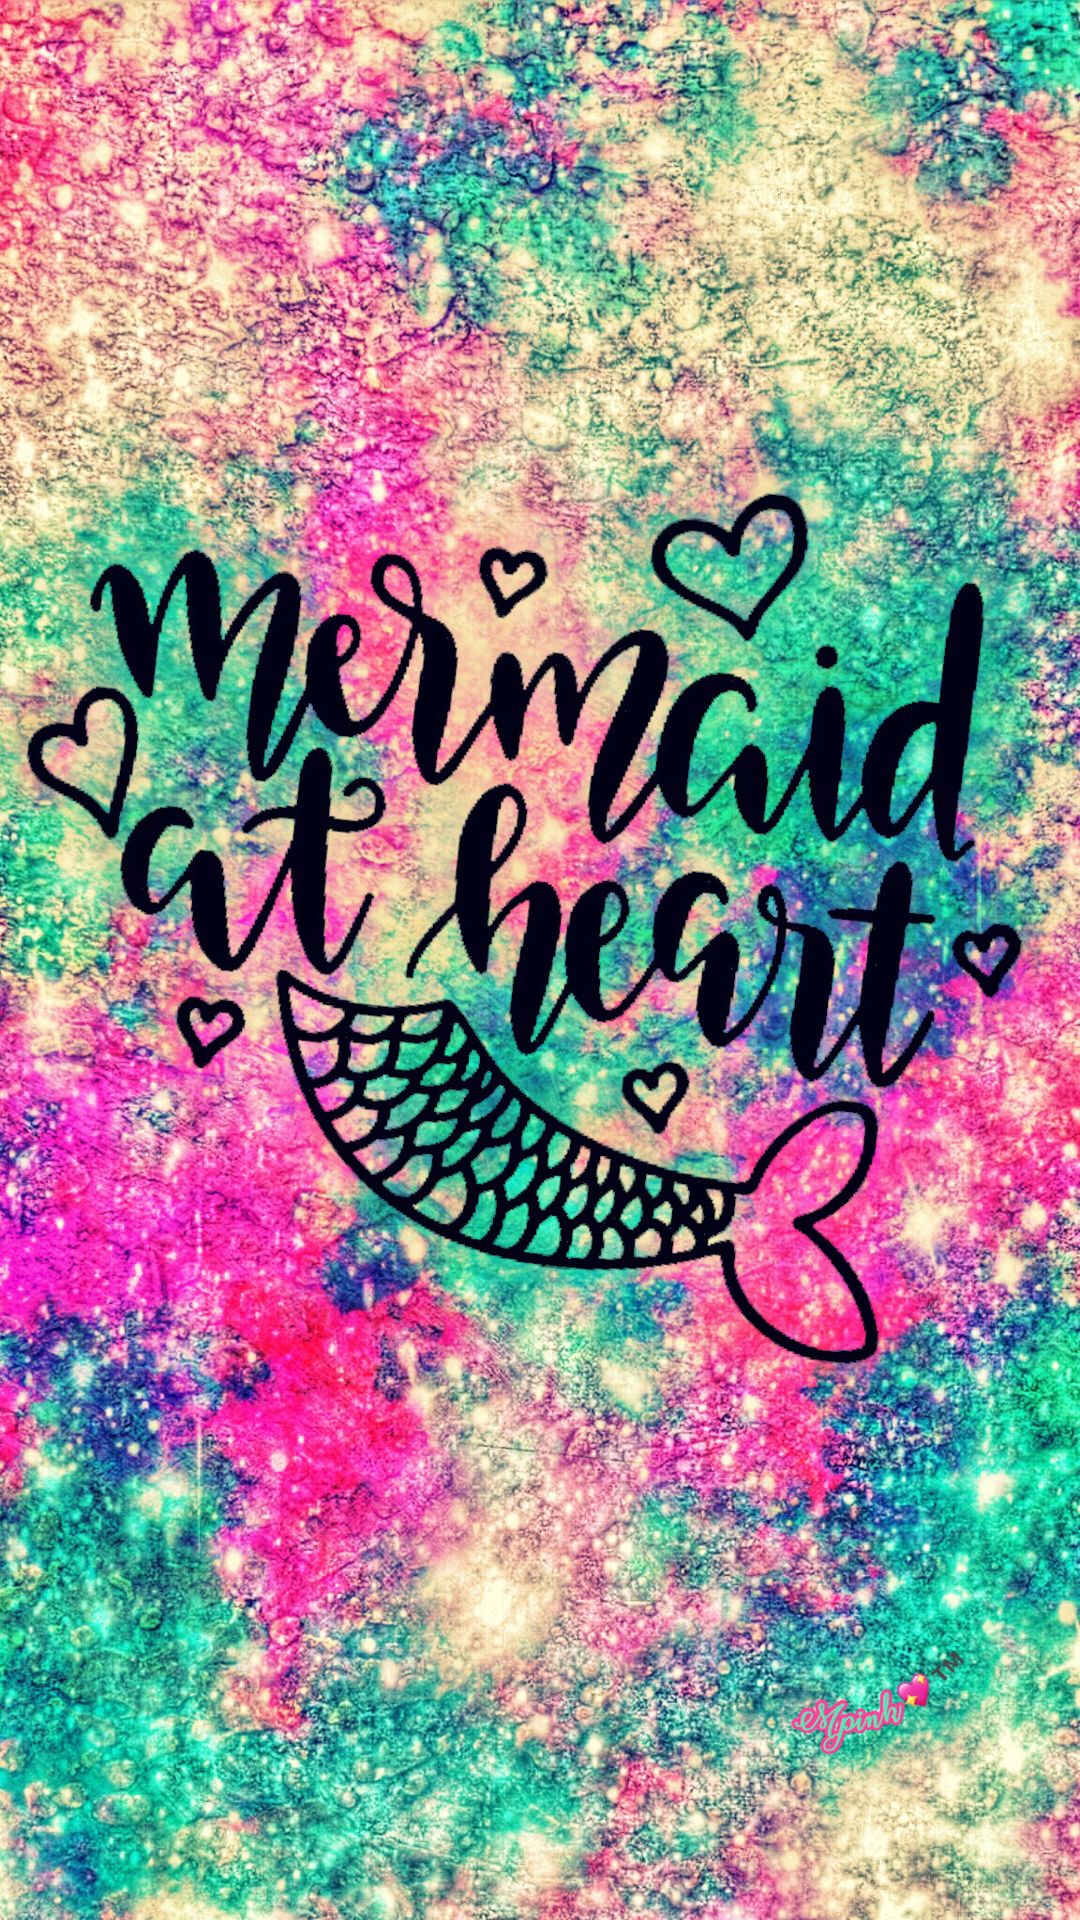 Mermaid At Heart Galaxy Wallpaper androidwallpaper